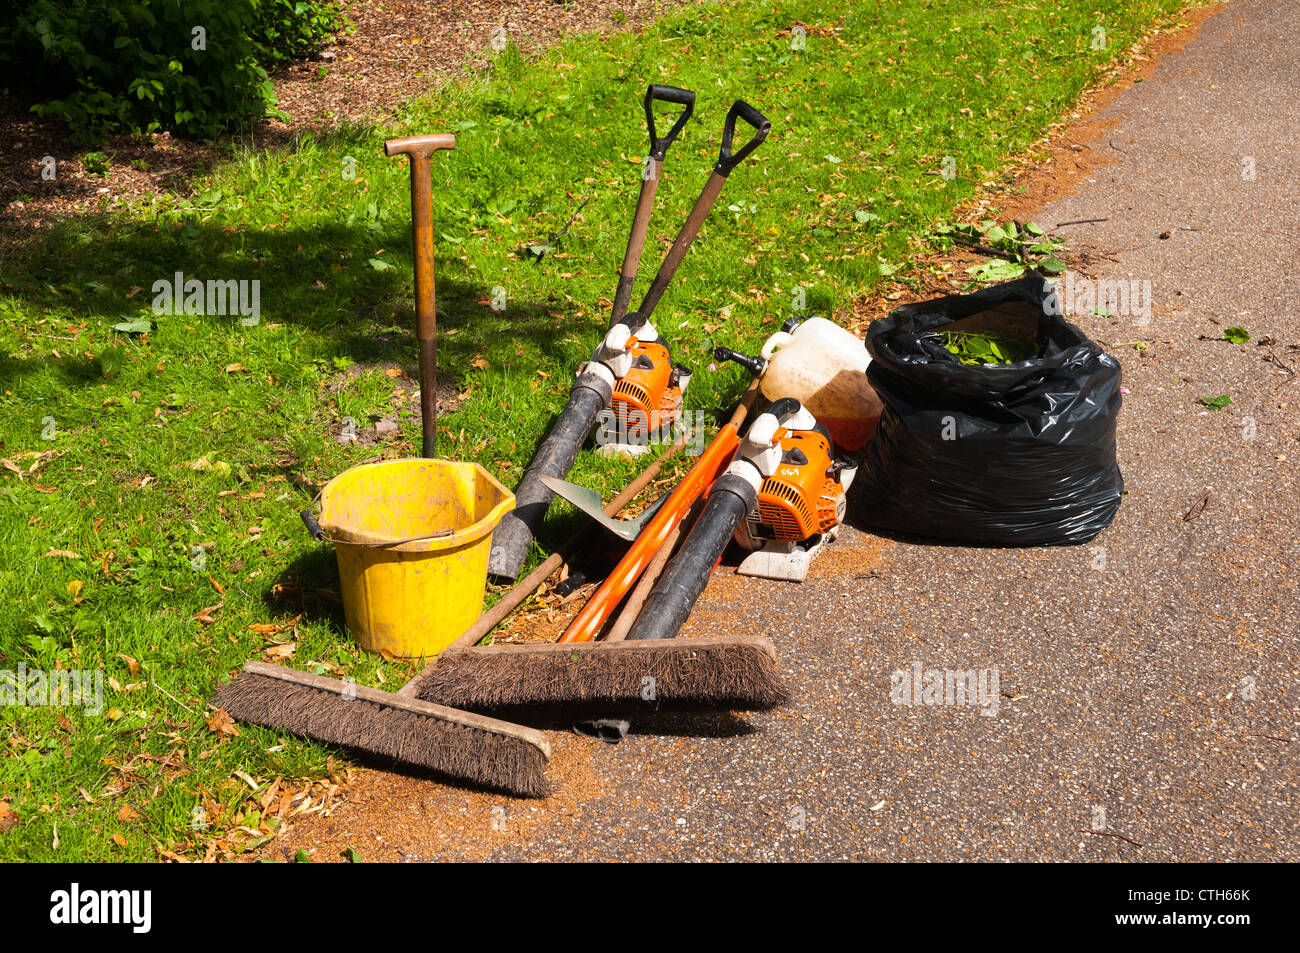 Garden maintenance equipment Stock Photo